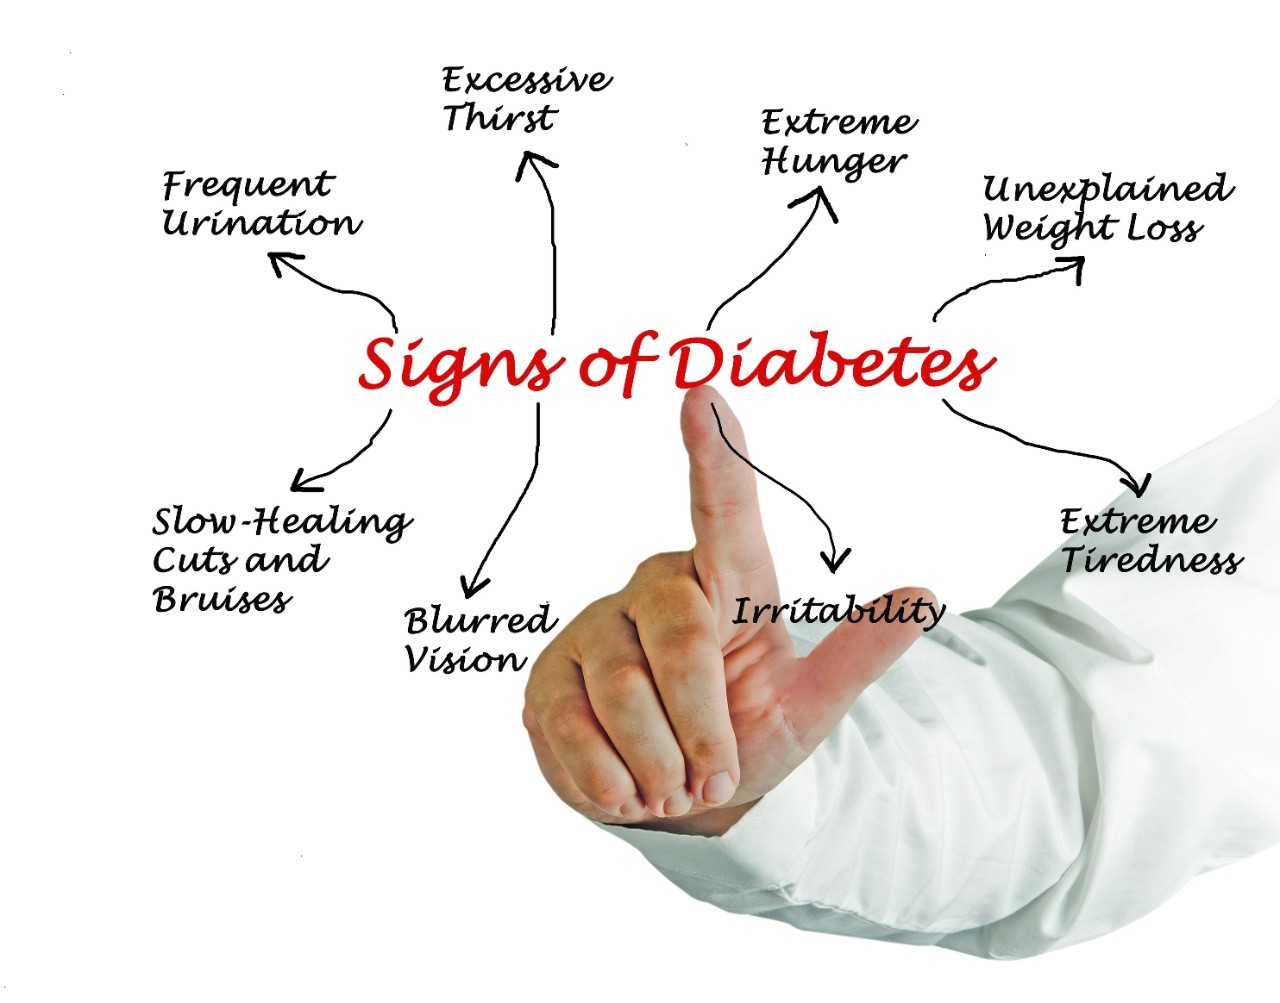 Diabetes and Dementia